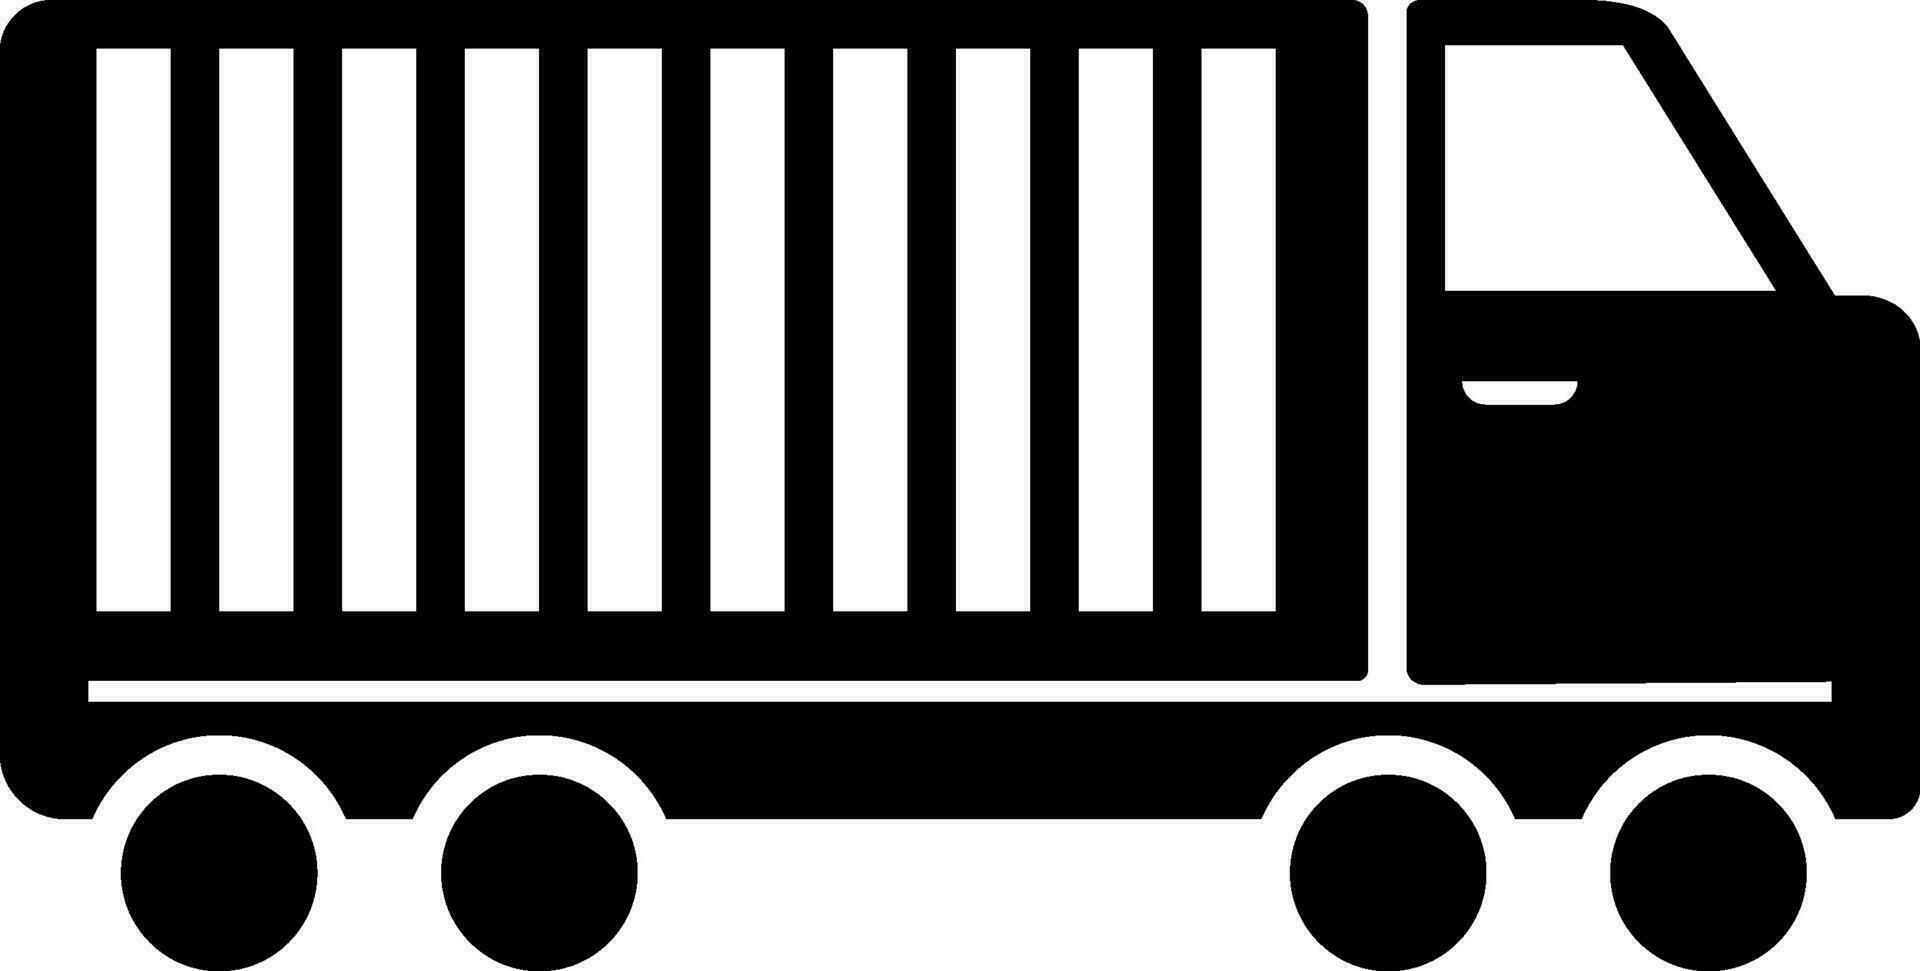 Flat illustration of a Black Truck Sign or Symbol. vector